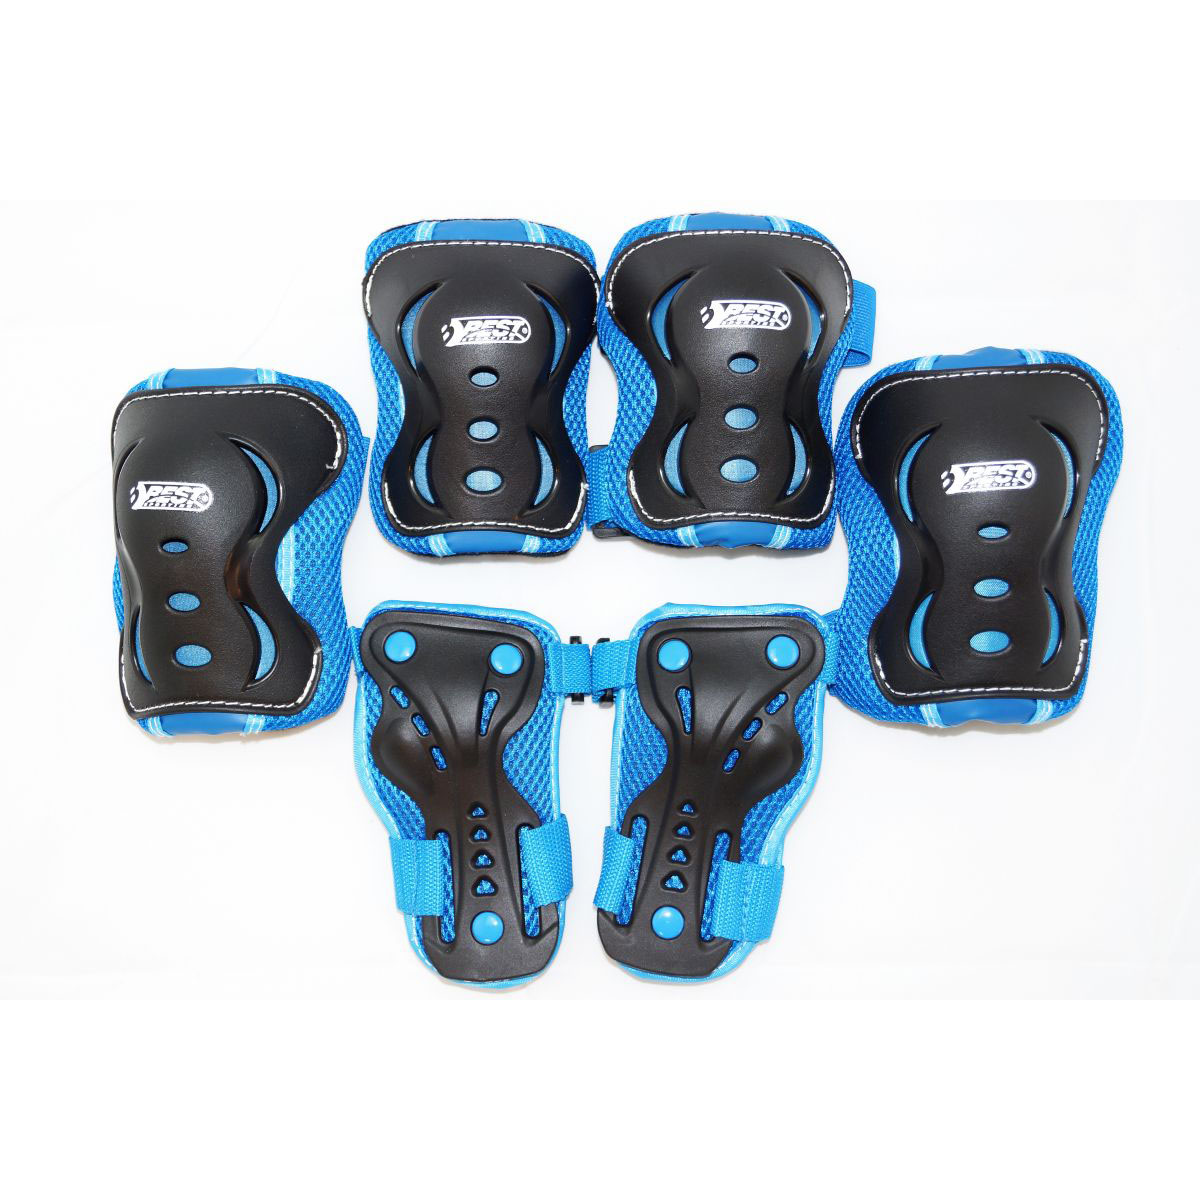 6X Kinder Schutzausrüstung Set Inliner Skater Schonerset Protektoren Sport I2D1 